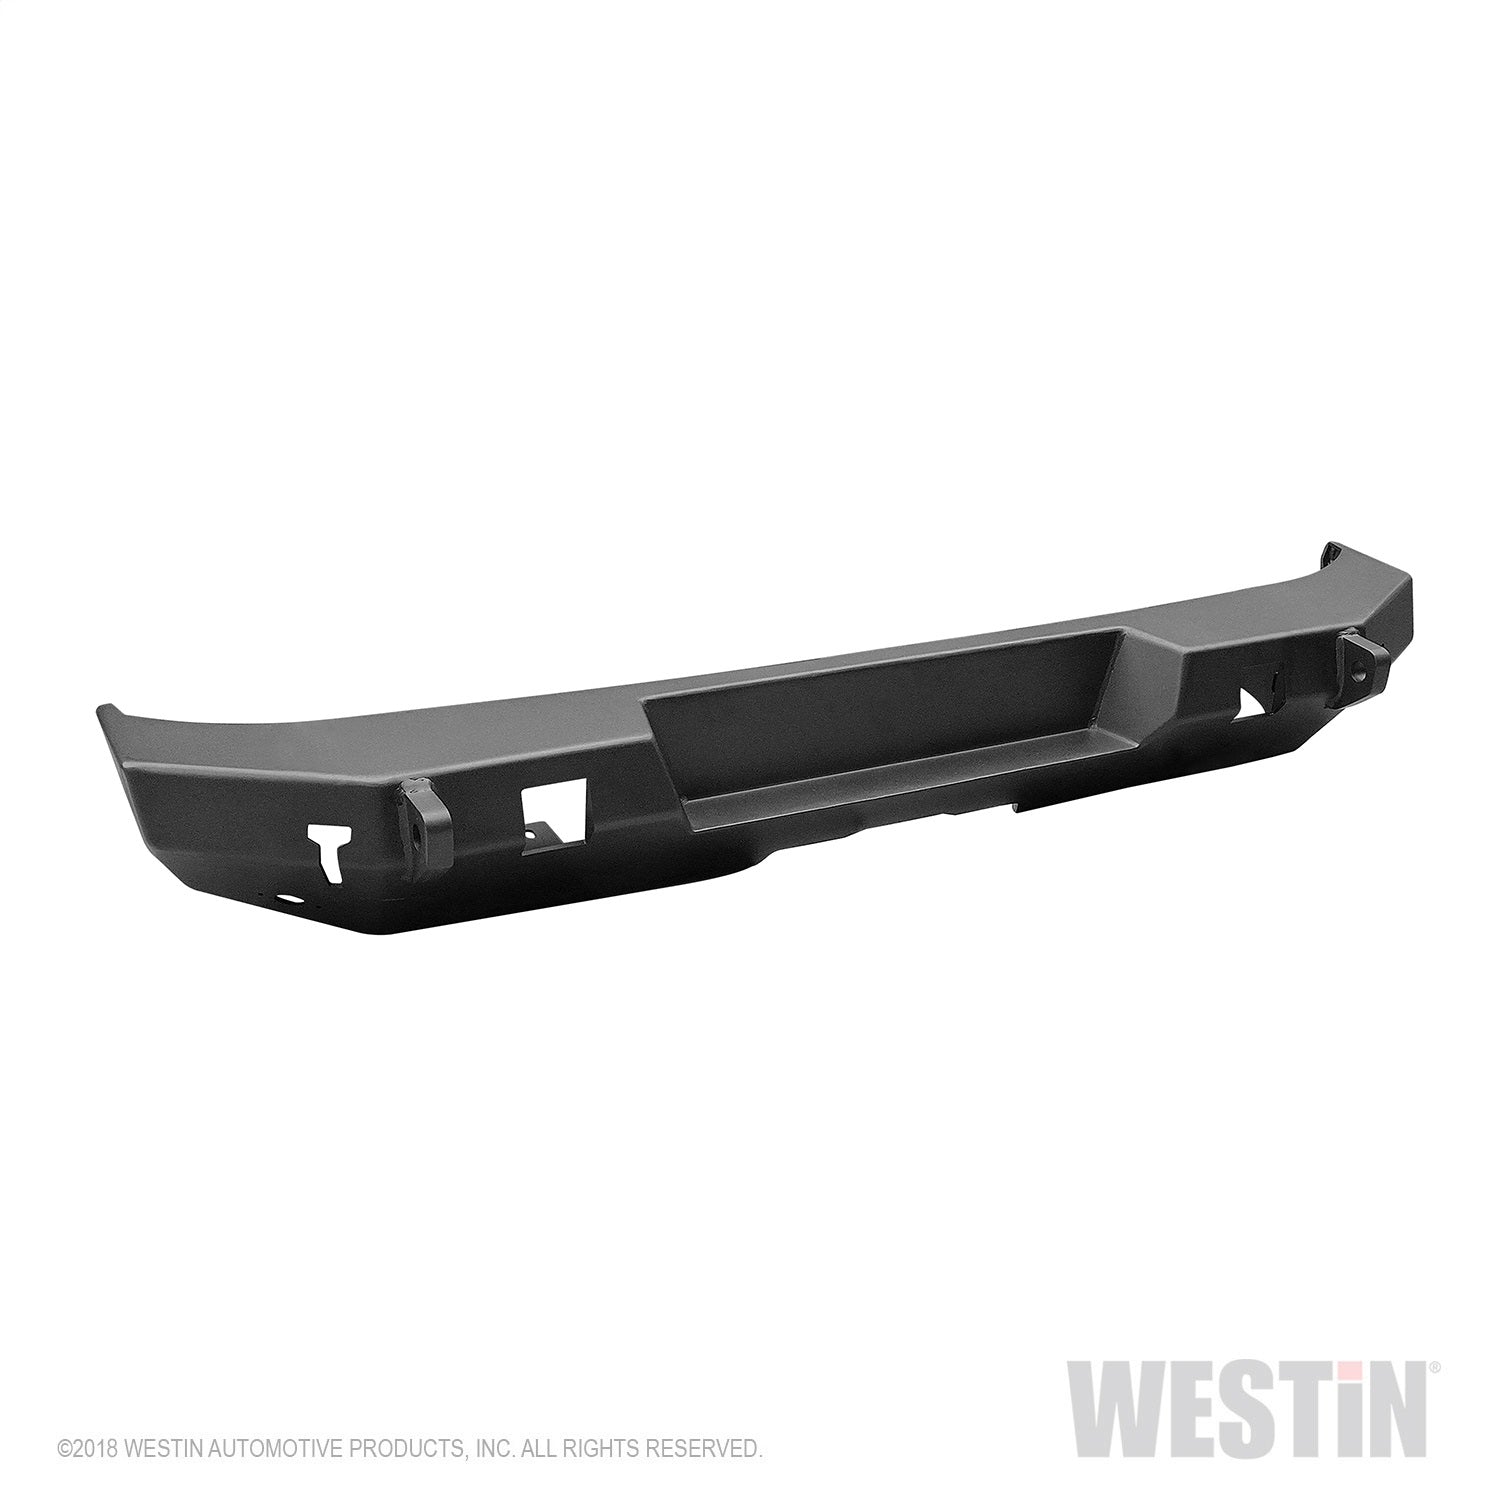 Westin 59-82025 WJ2 Rear Bumper Fits 18-22 Wrangler (JL)